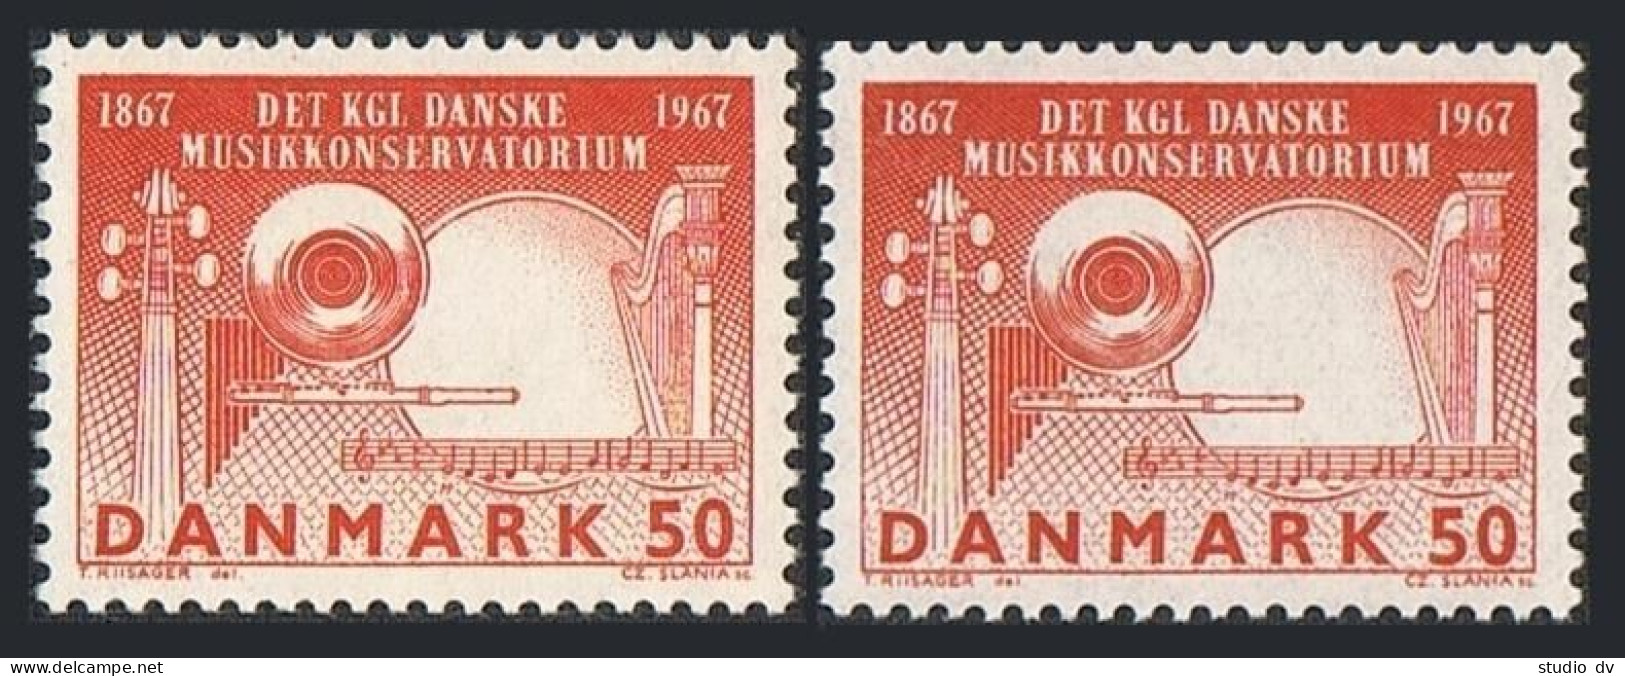 Denmark 430 Two Var, MNH. Michel 449x-449y. Royal Danish Academy Of Music, 1967. - Nuovi